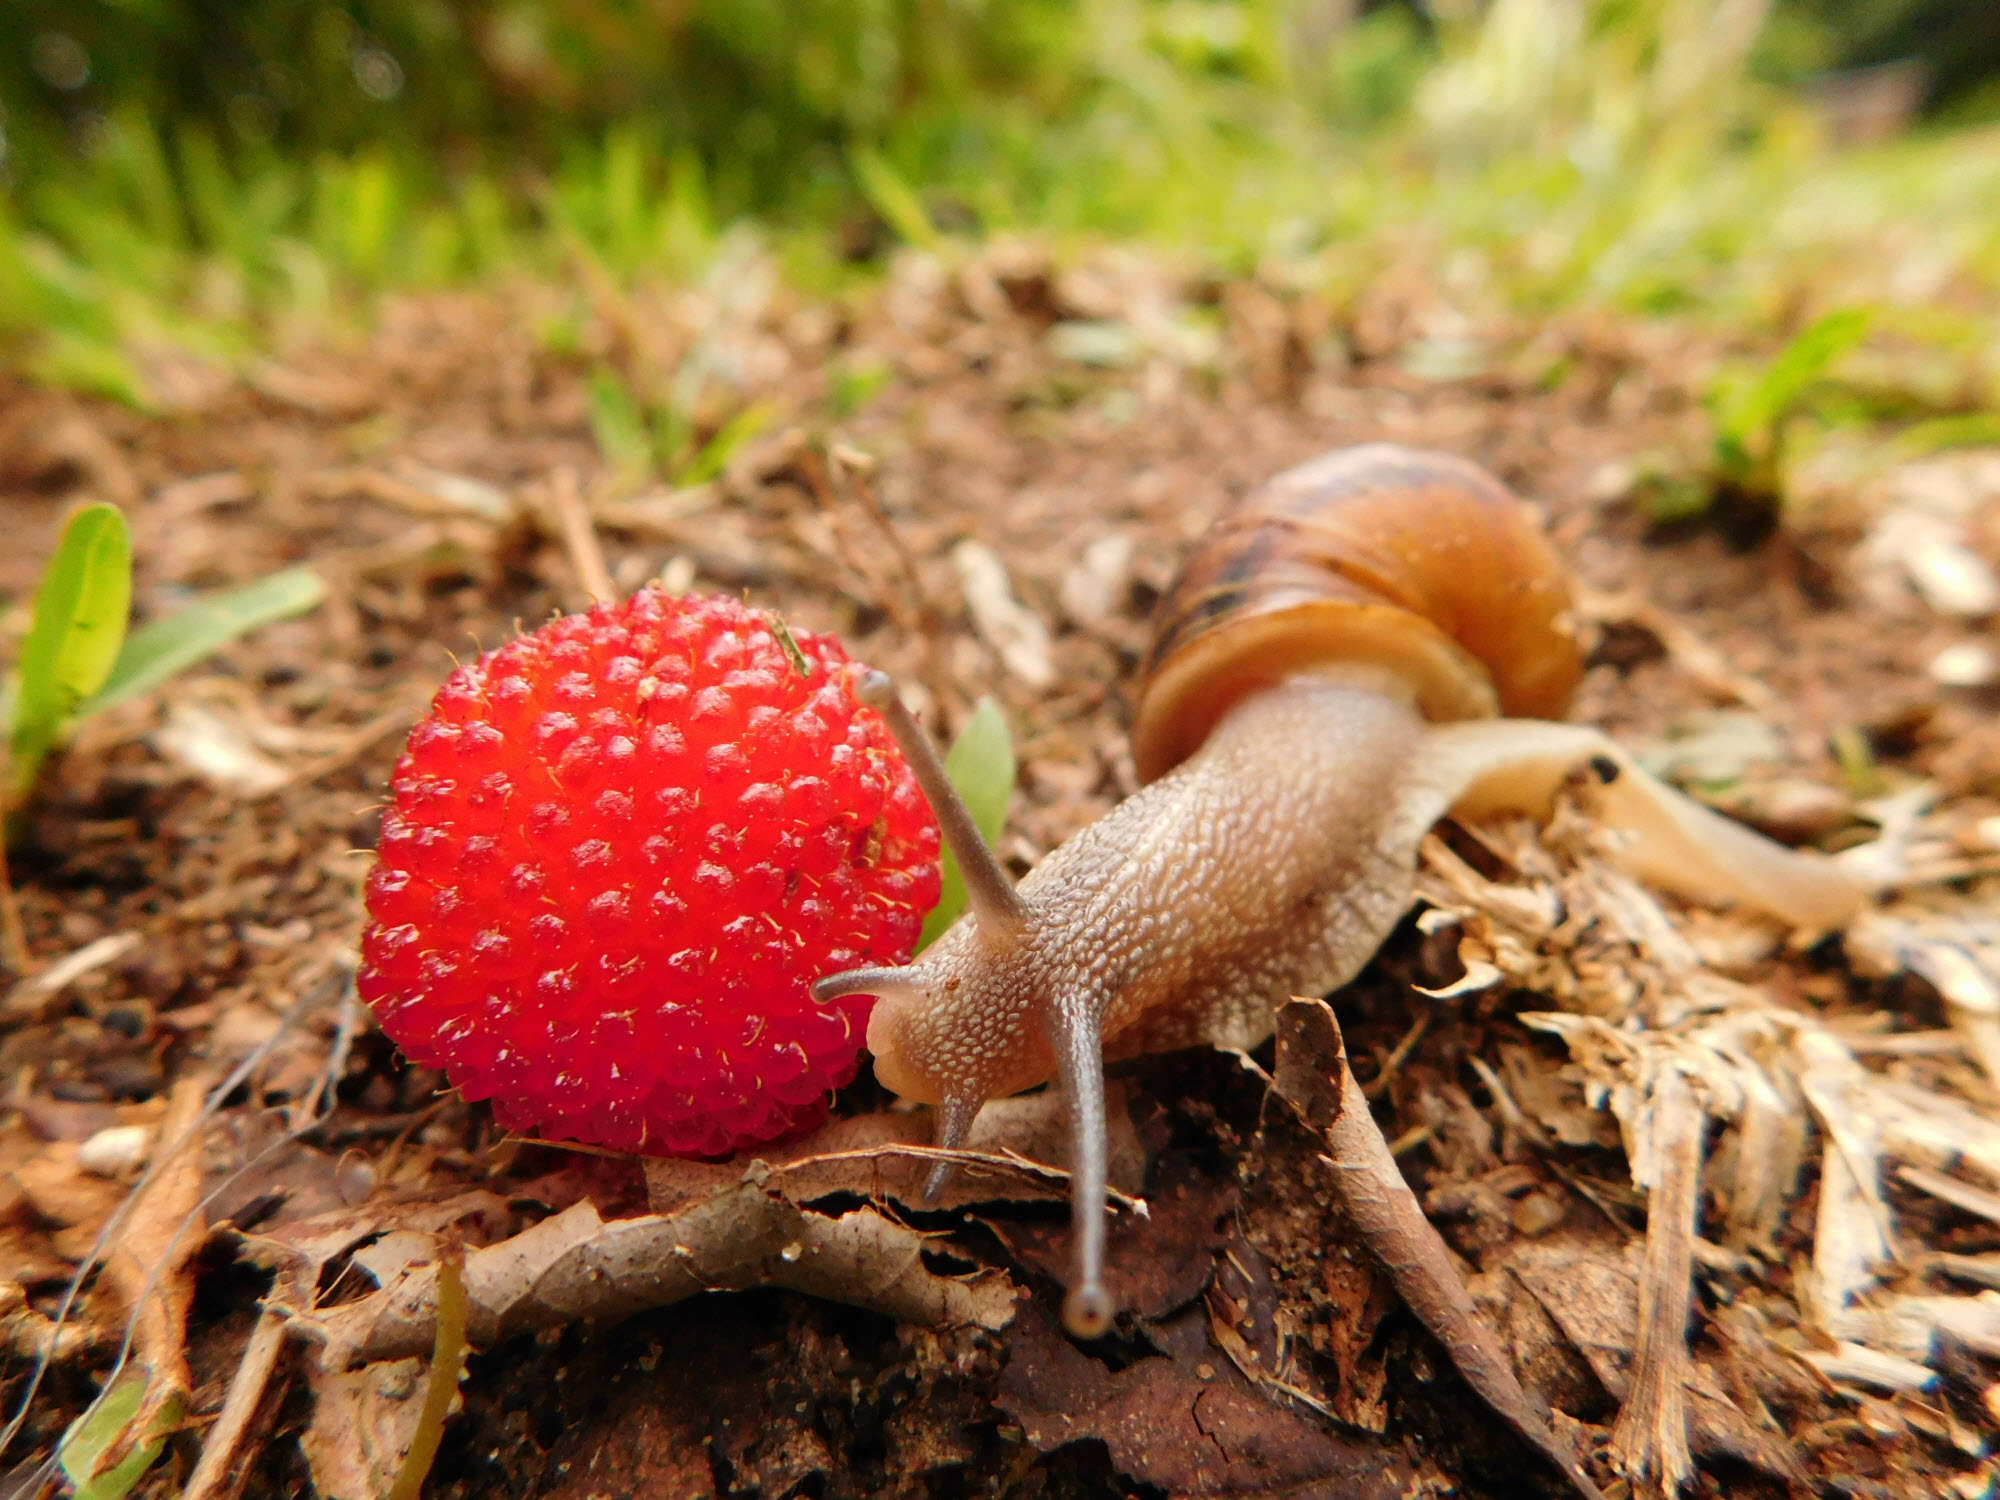 Common garden snail inspecting a wineberry in KwaZulu-Natal